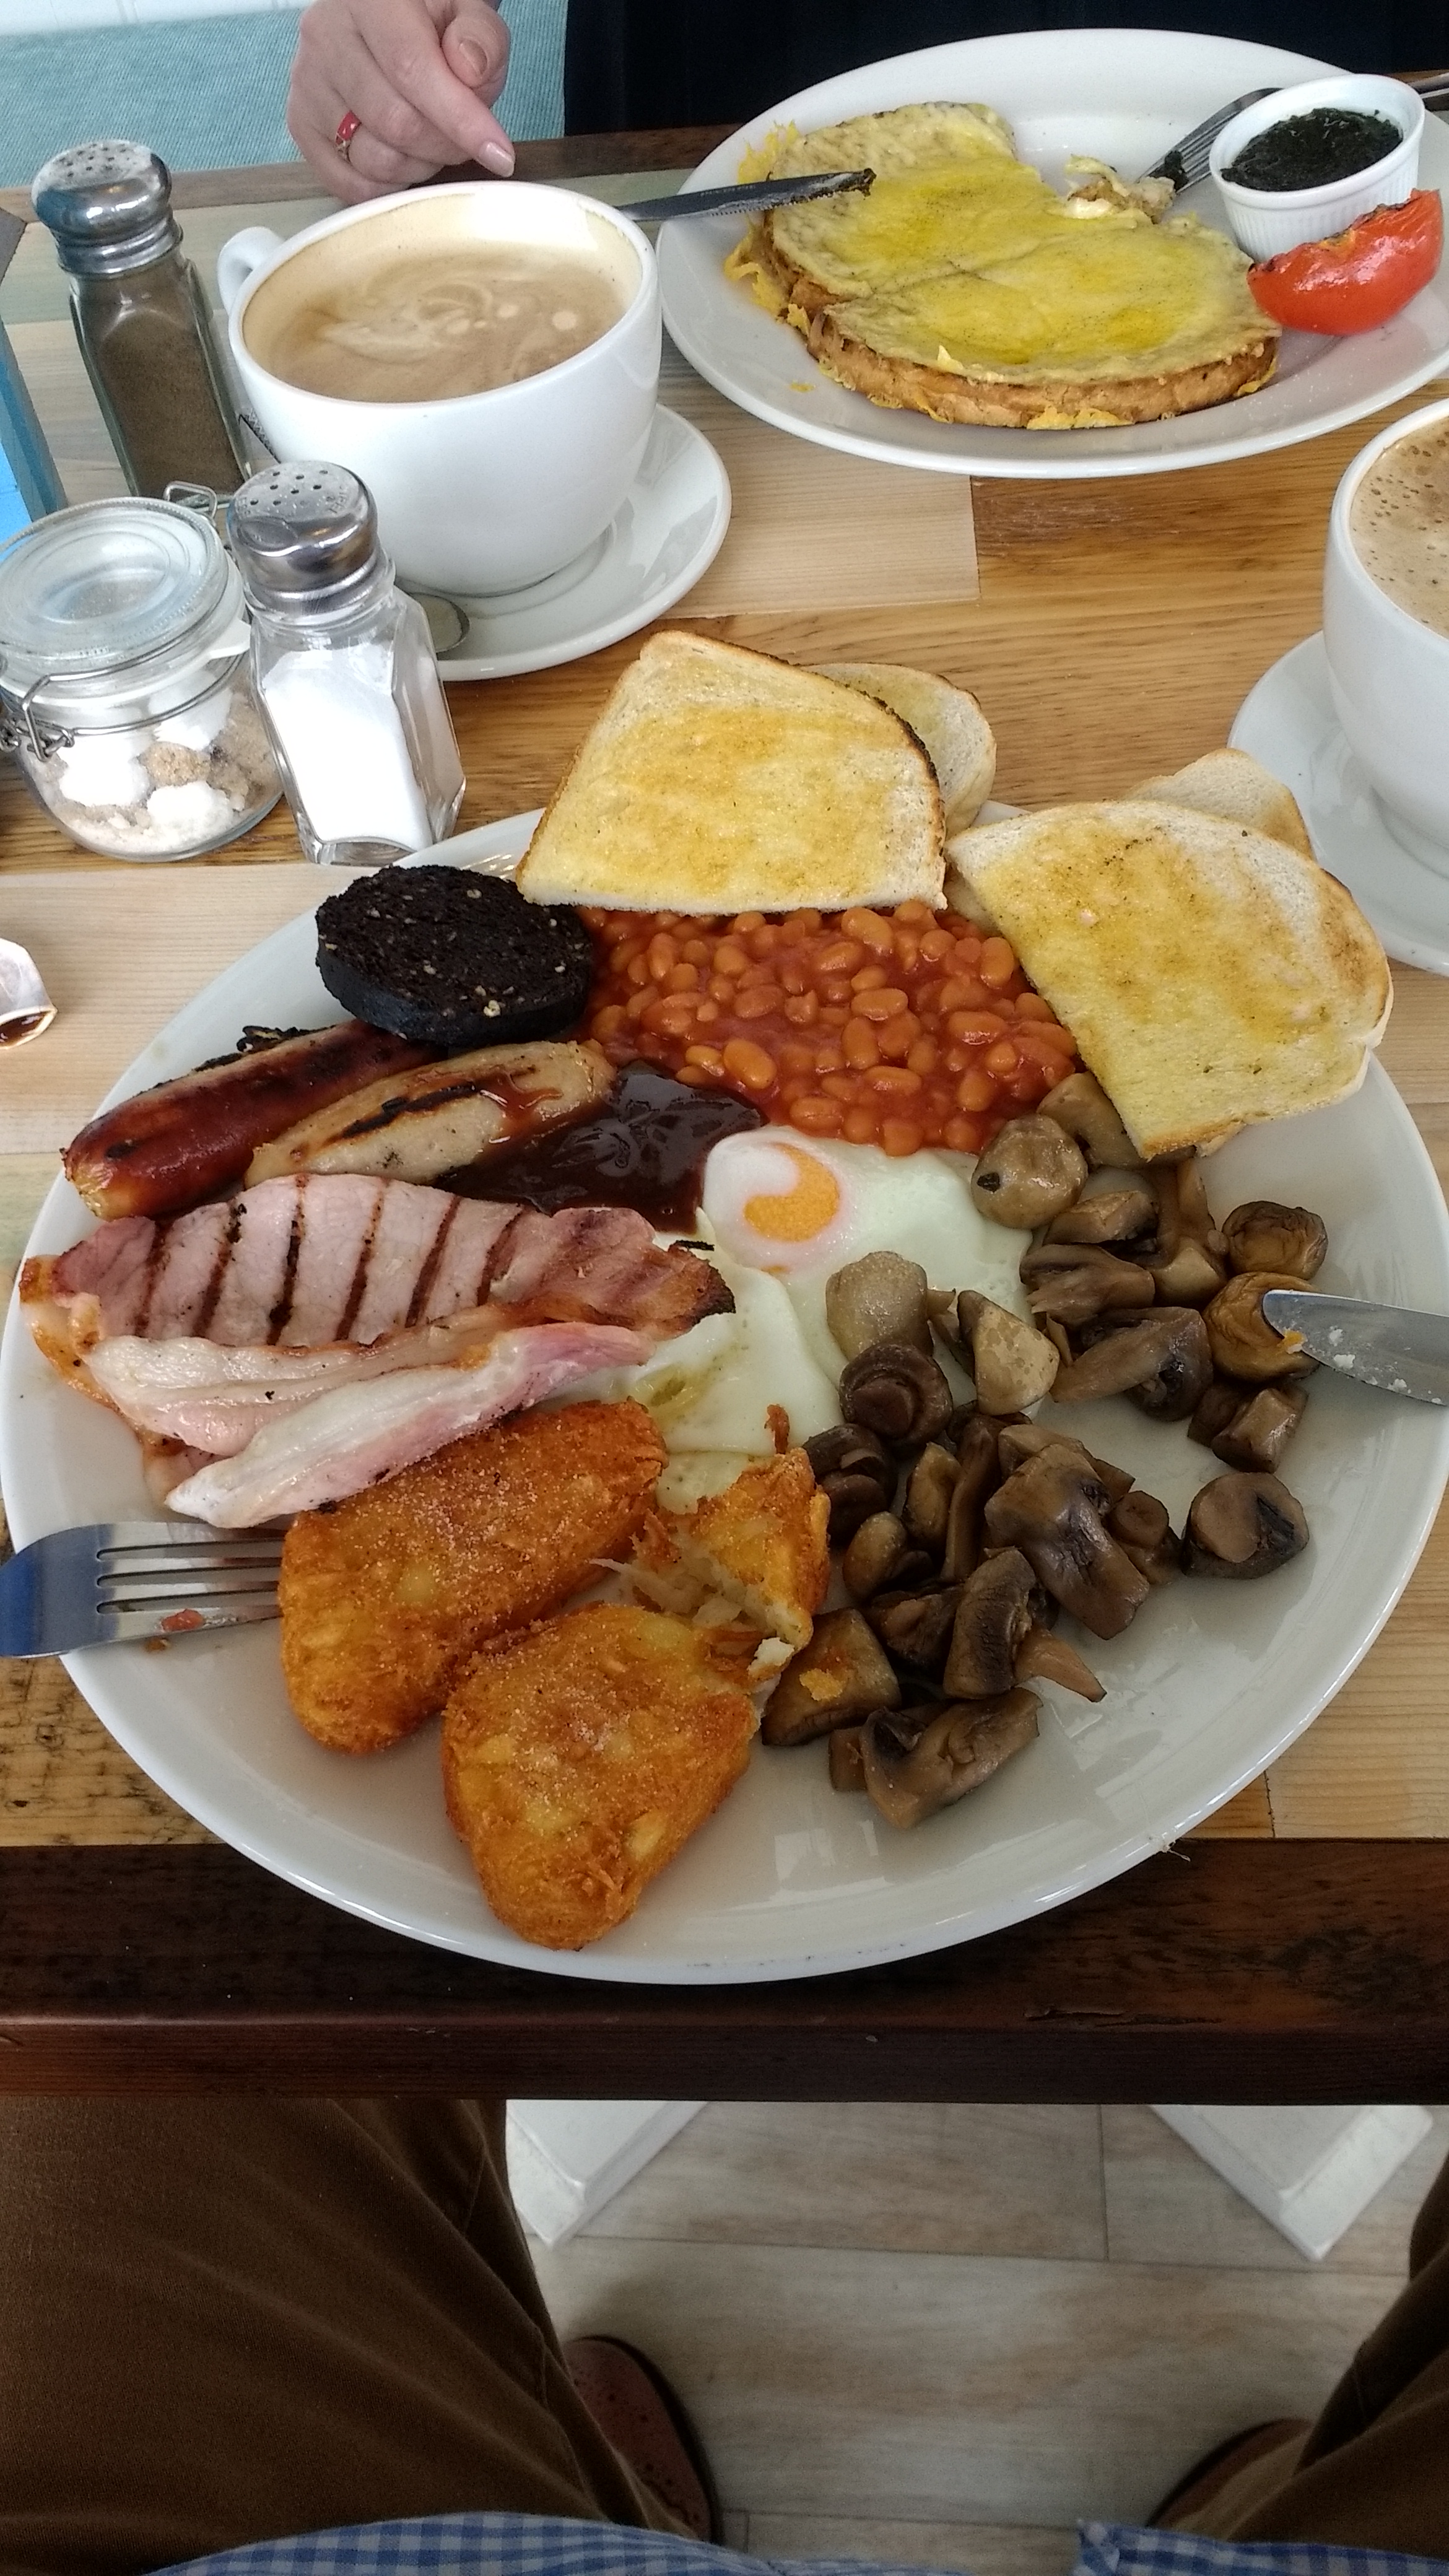 The Great Breakfast photo thread - Page 301 - Food, Drink & Restaurants - PistonHeads